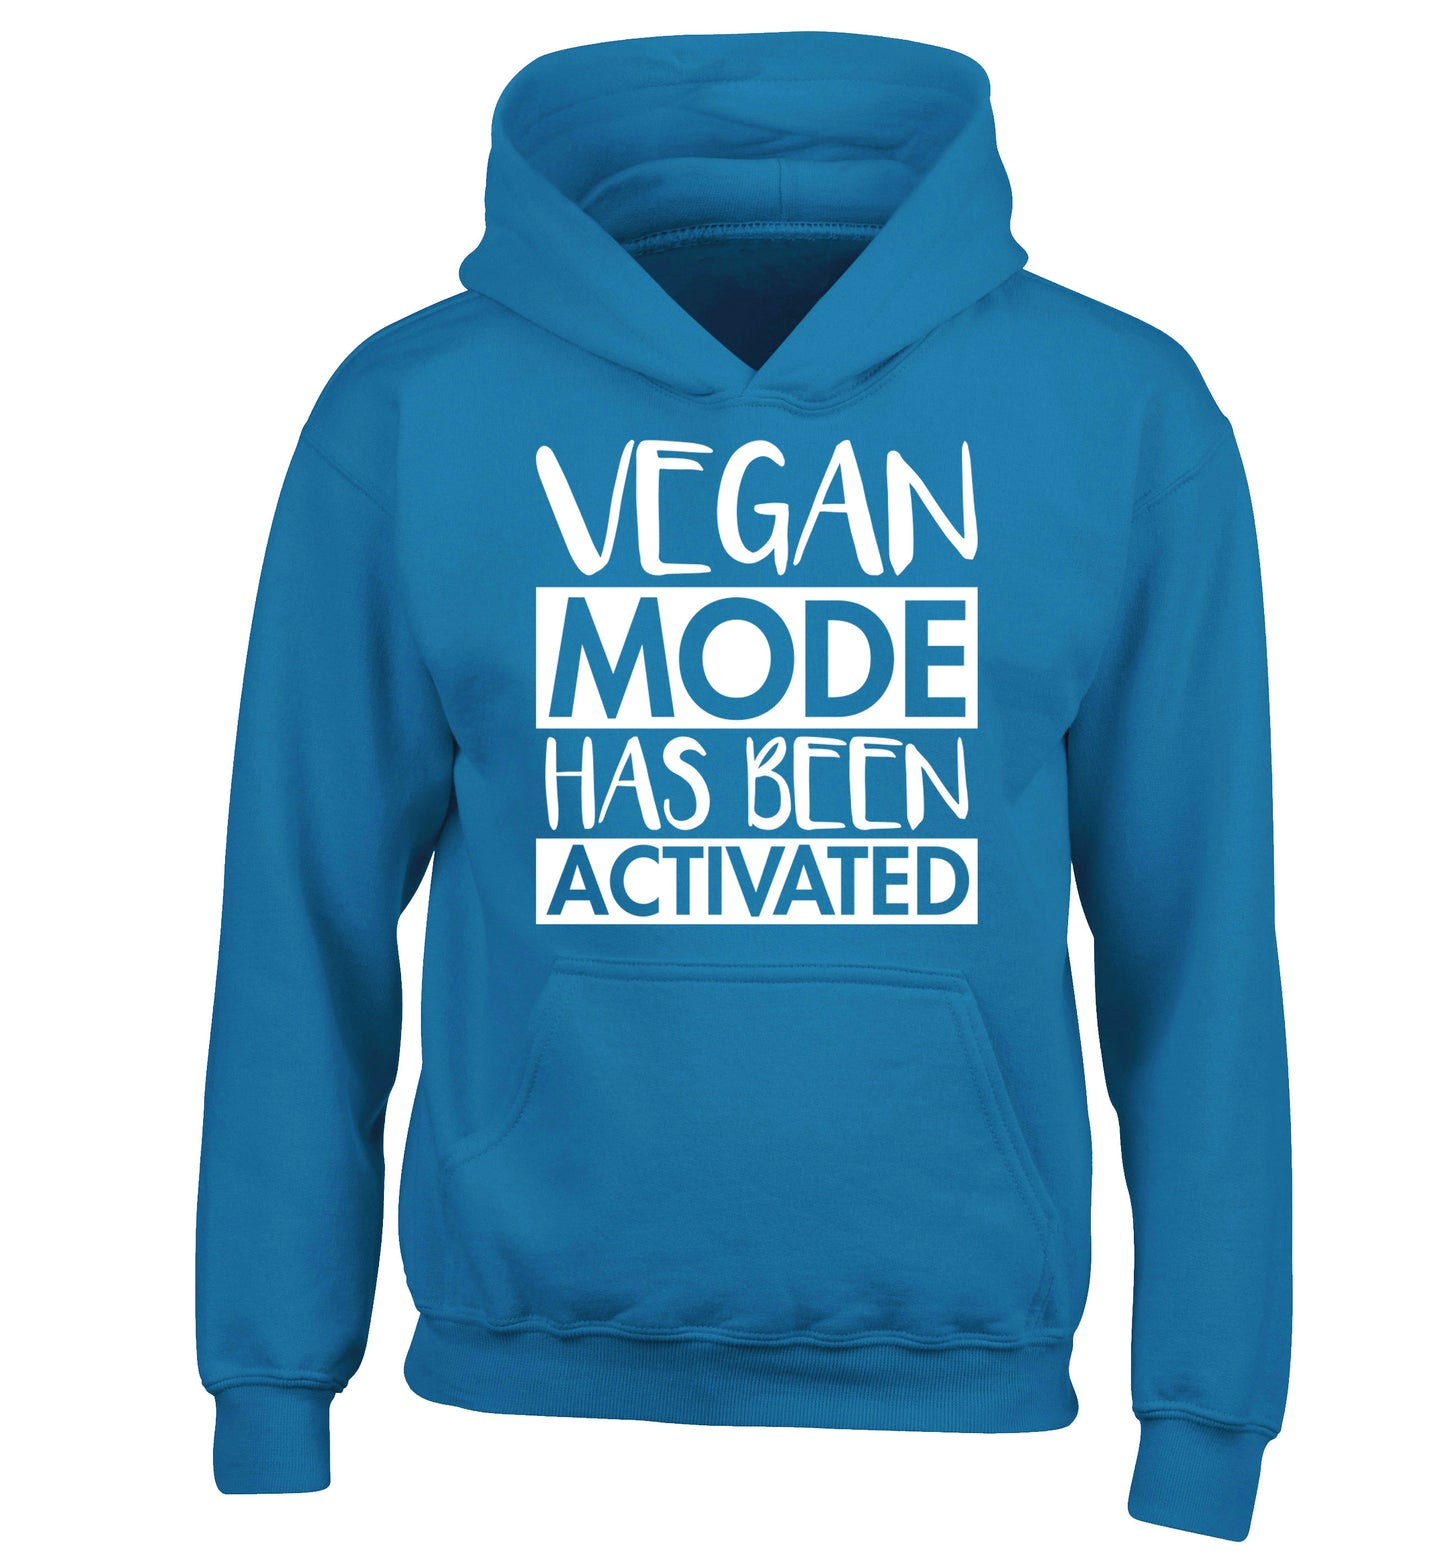 Vegan mode activated children's blue hoodie 12-14 Years